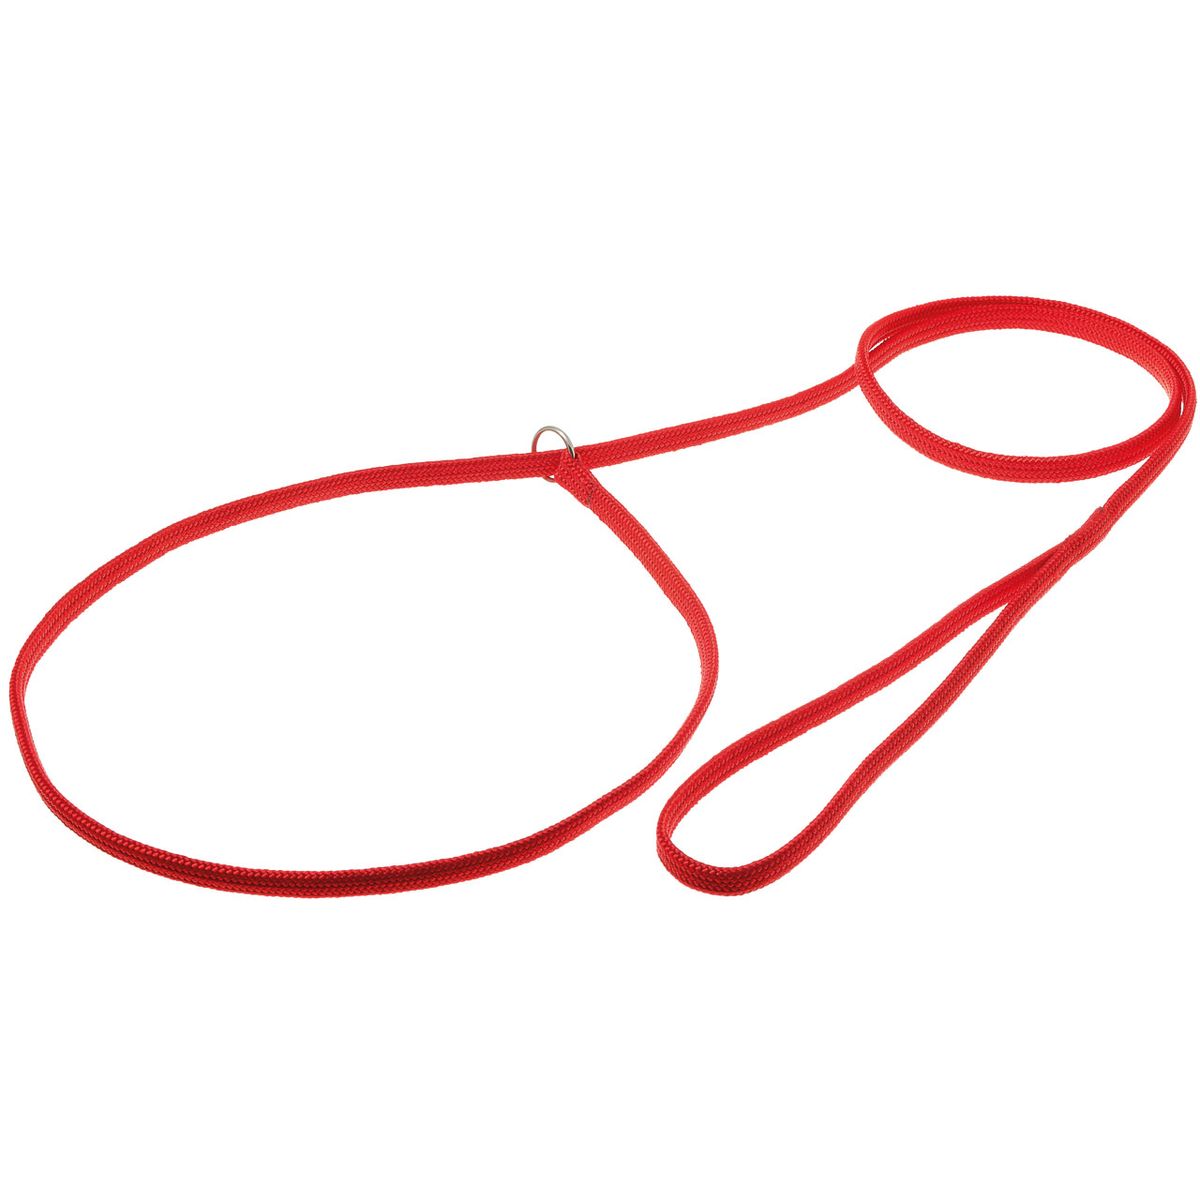 фото Поводок-удавка для собак zooone с кольцом (лента-чулок), красный, 5 мм x 120 см